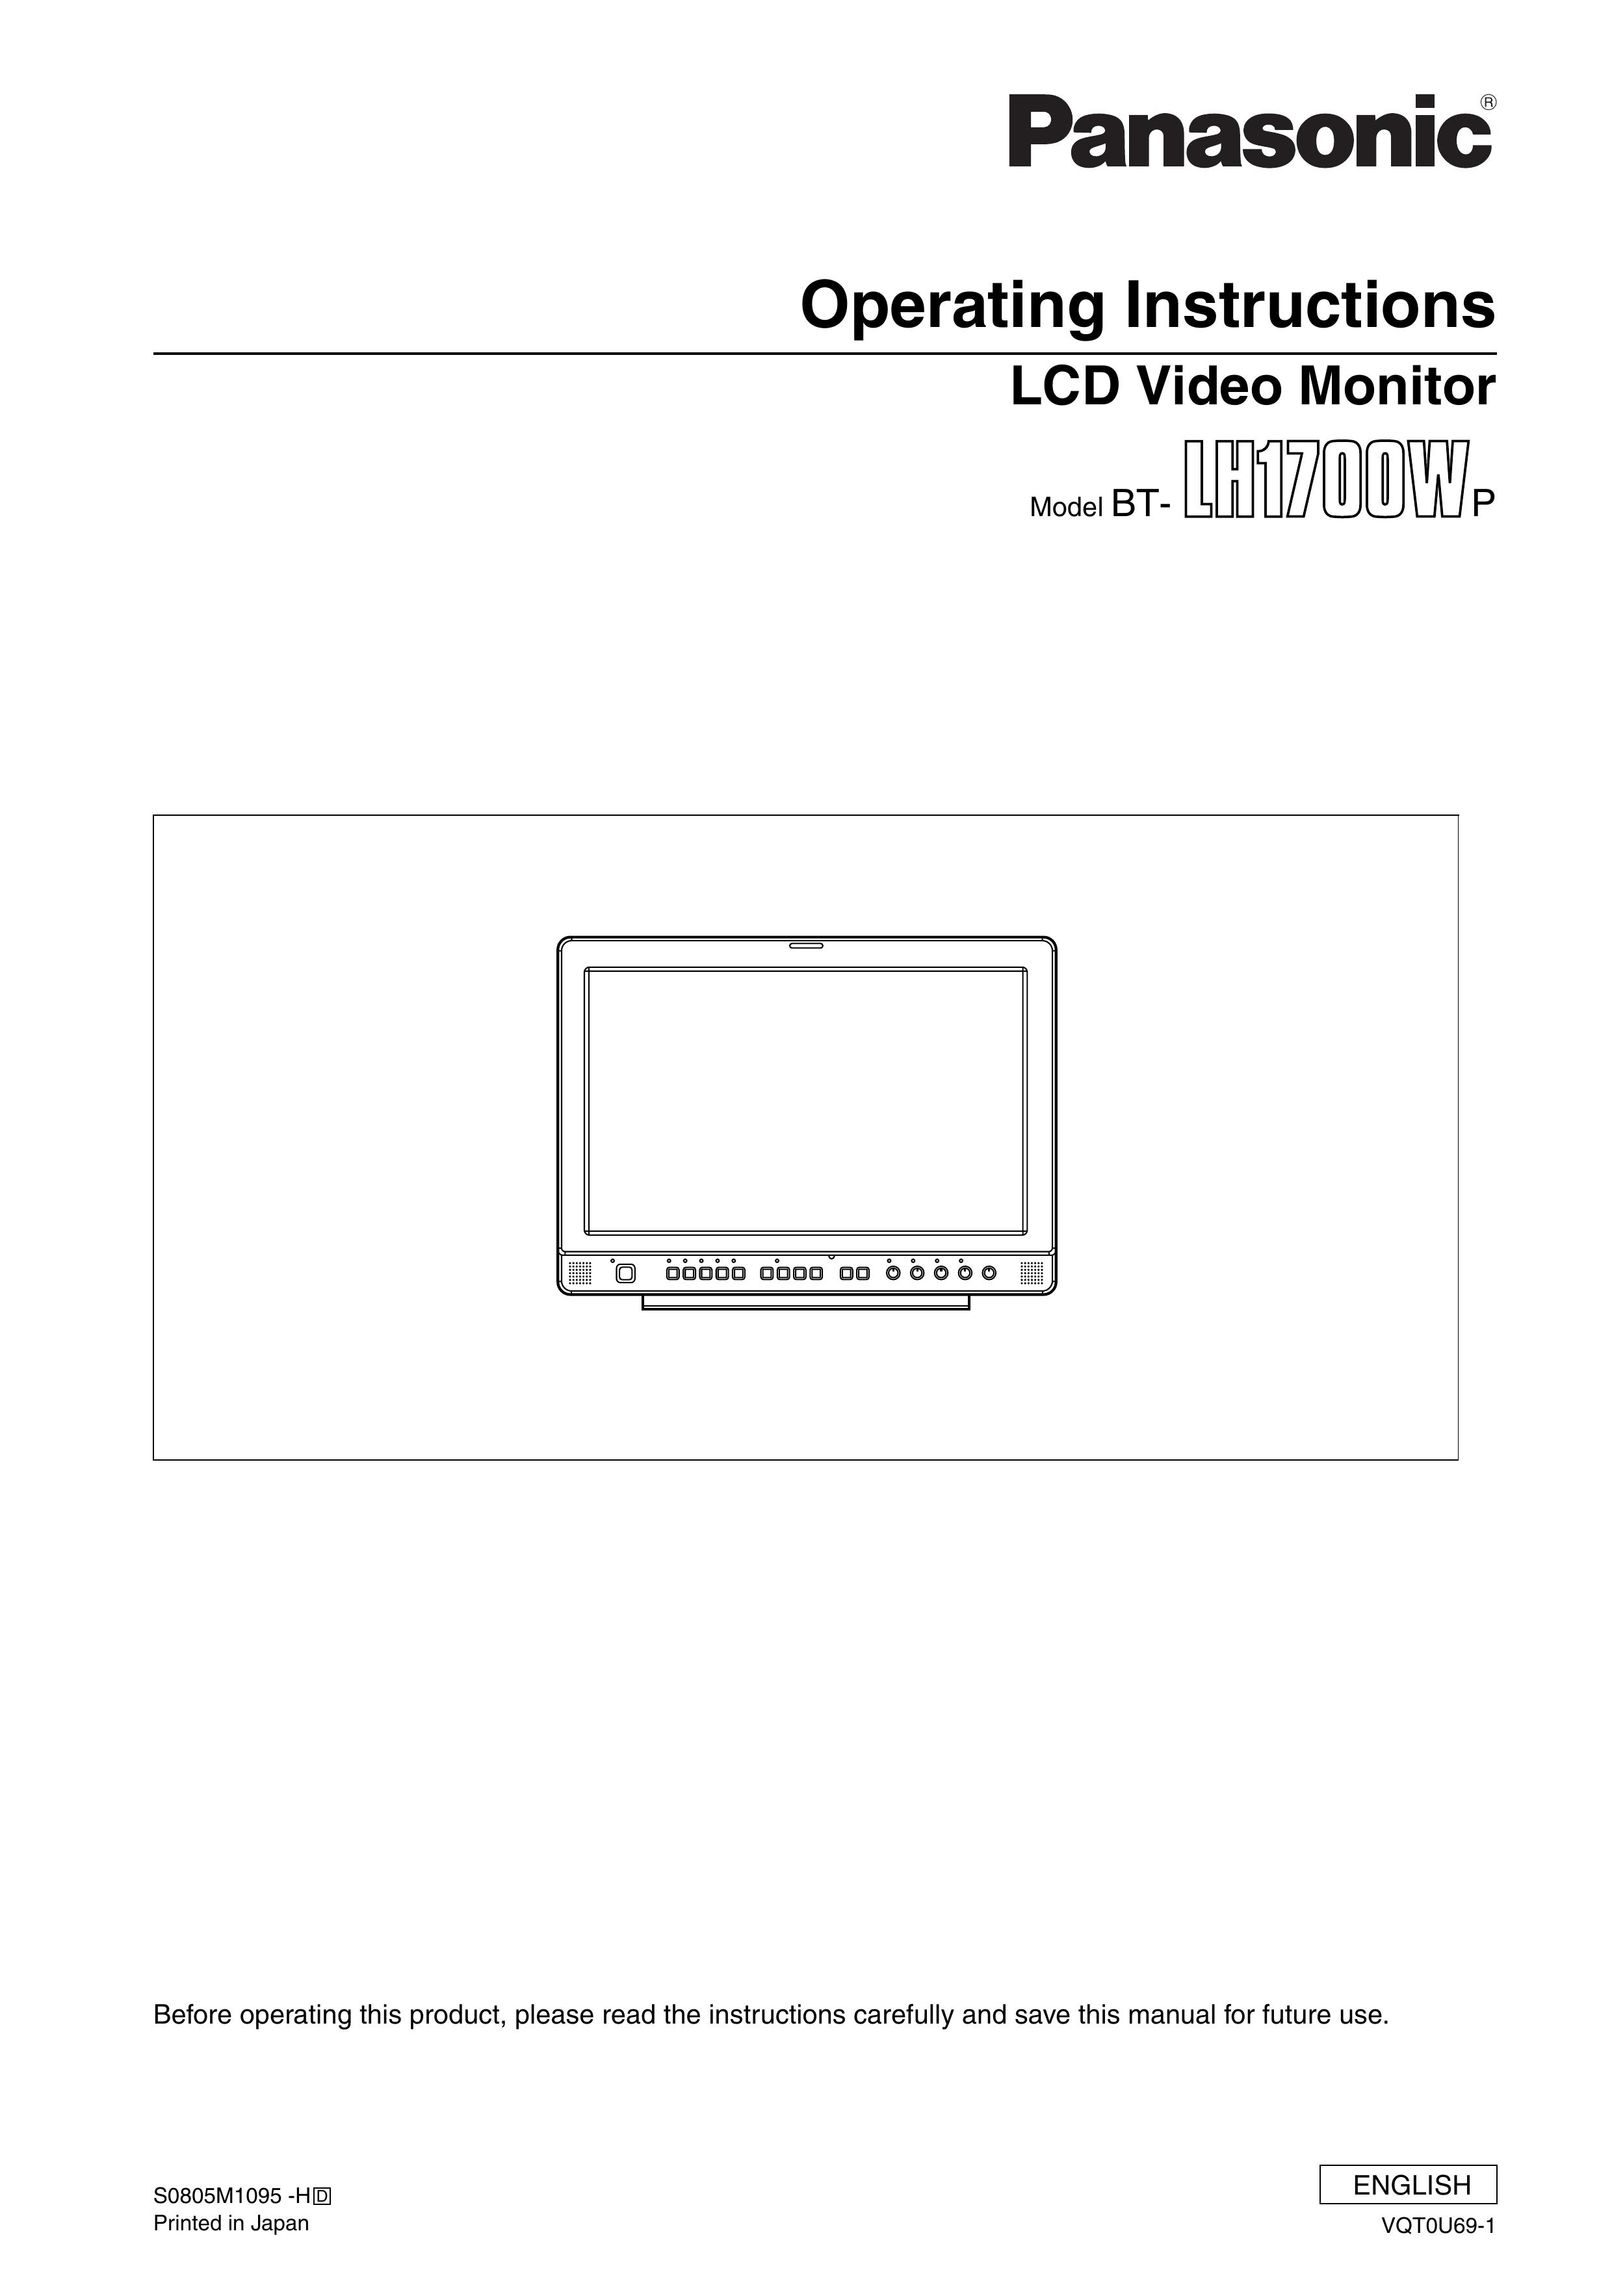 Panasonic BT-LH1700W Computer Monitor User Manual